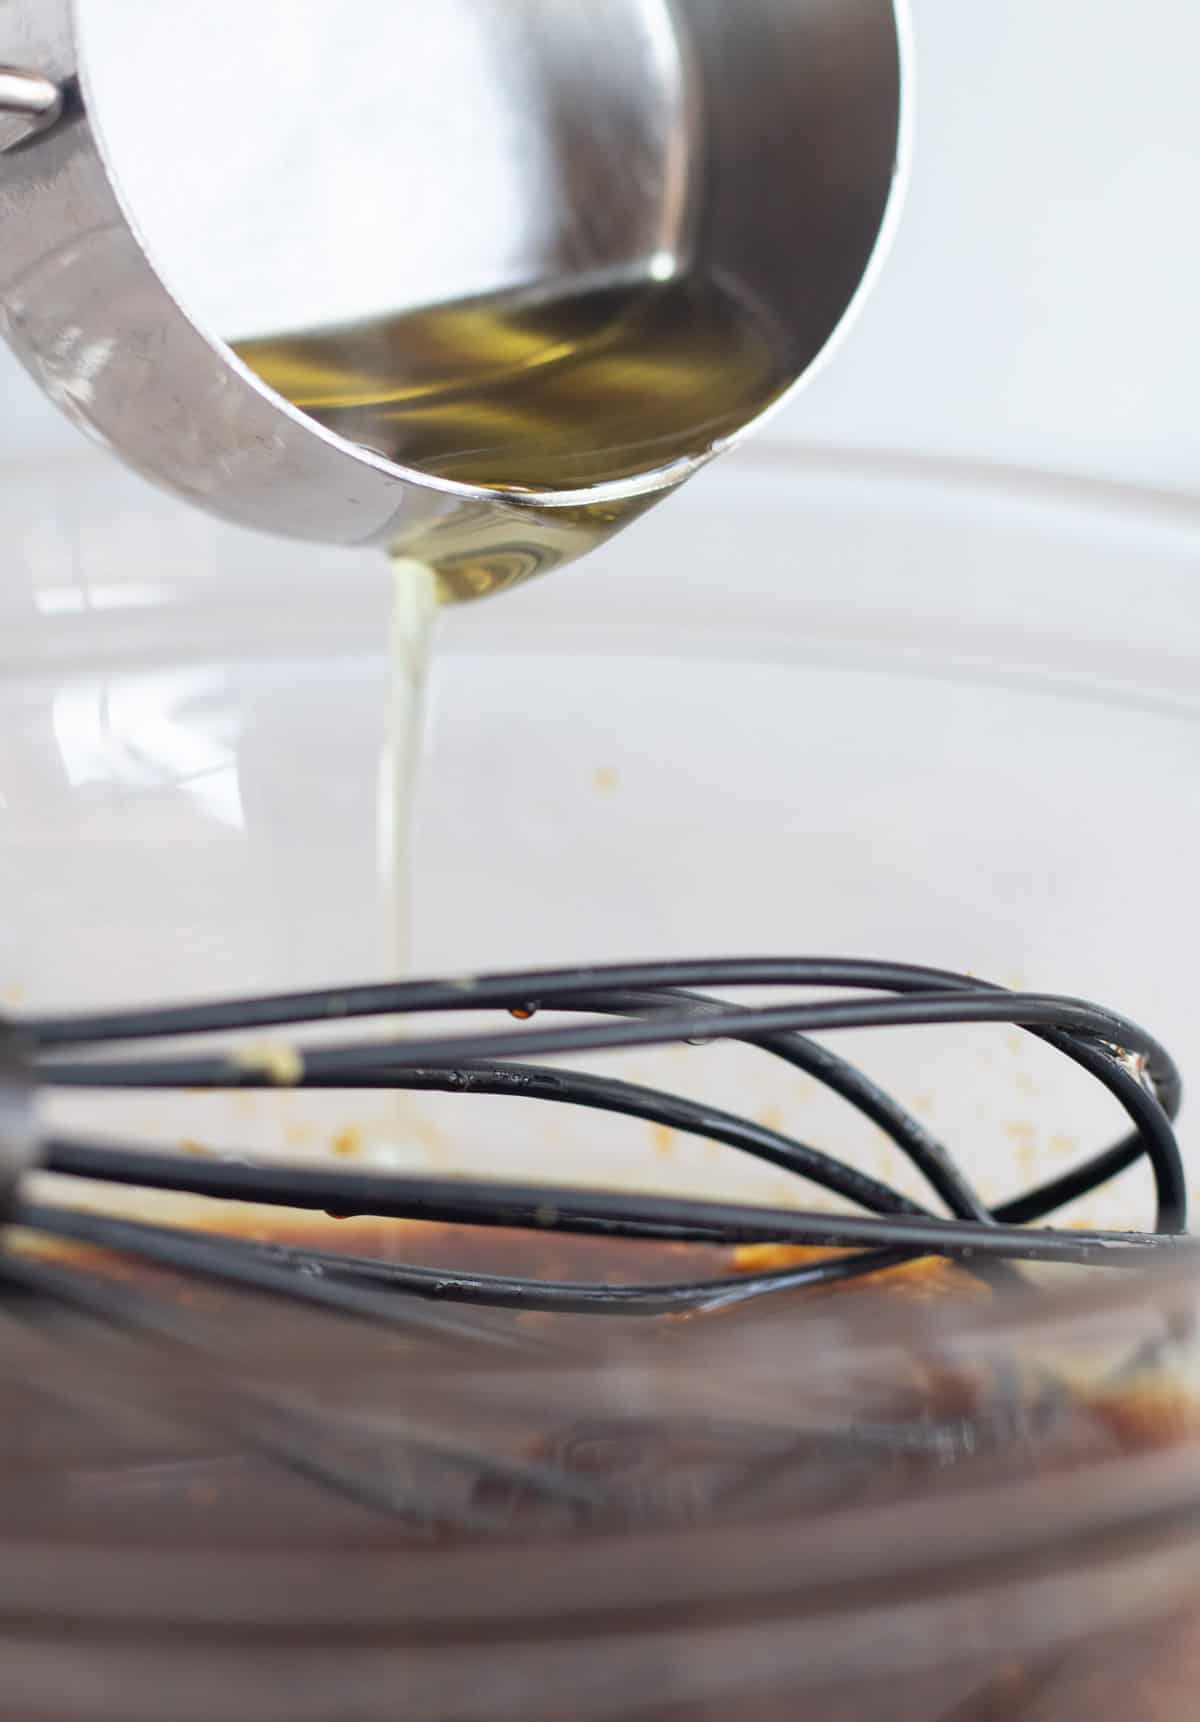 whidking oil into vinaigrette